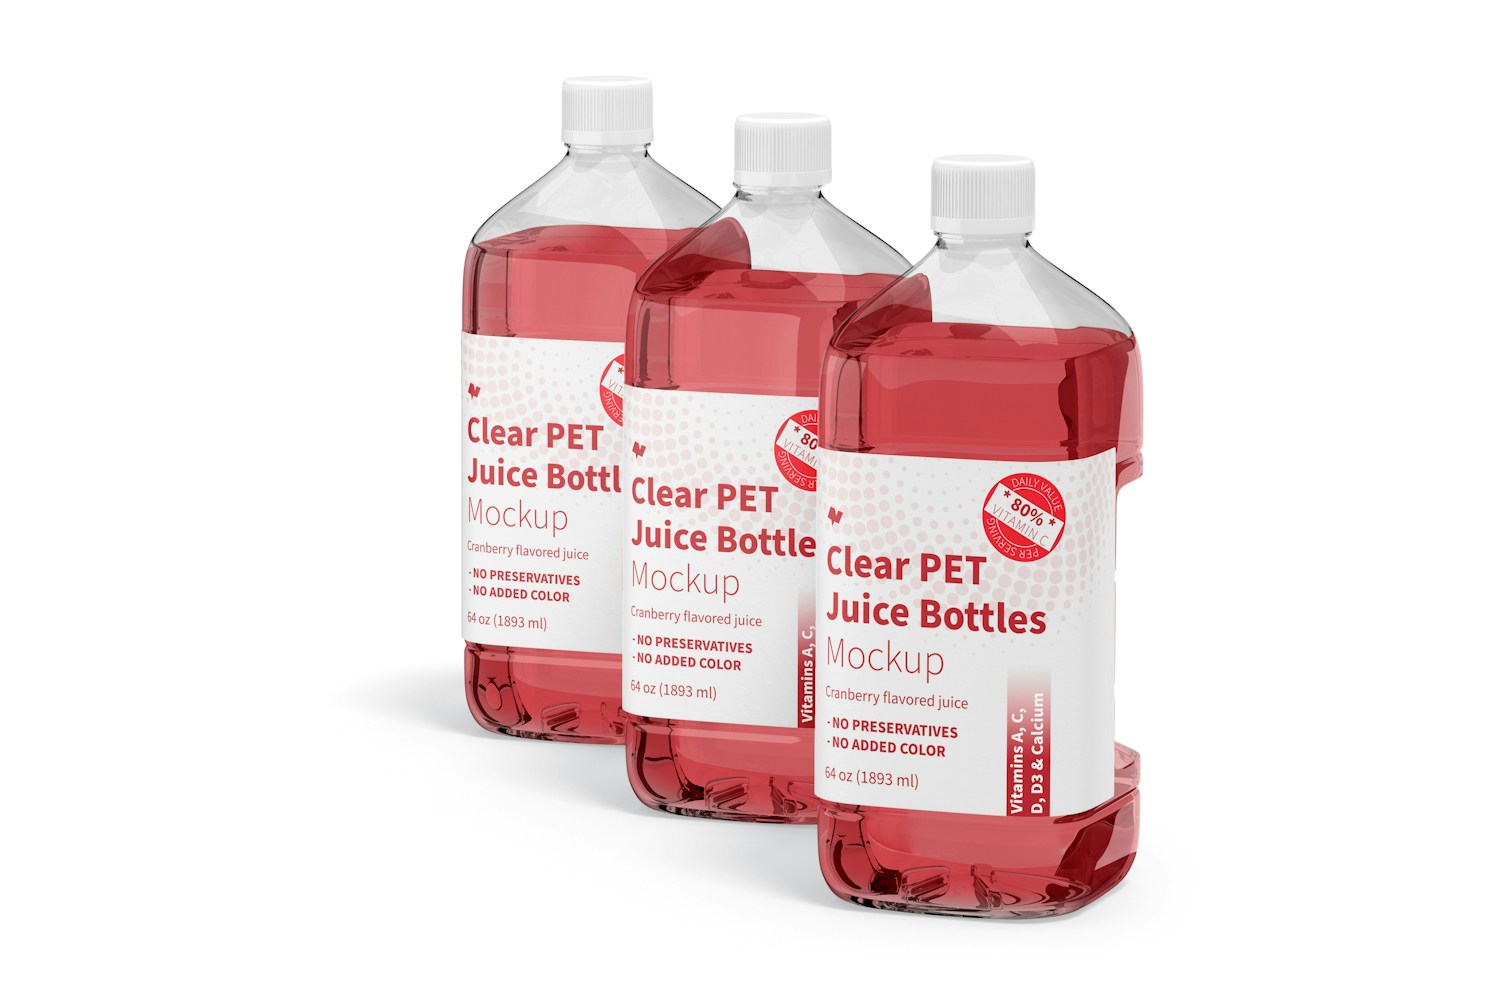 64 oz Clear PET Juice Bottles Mockup